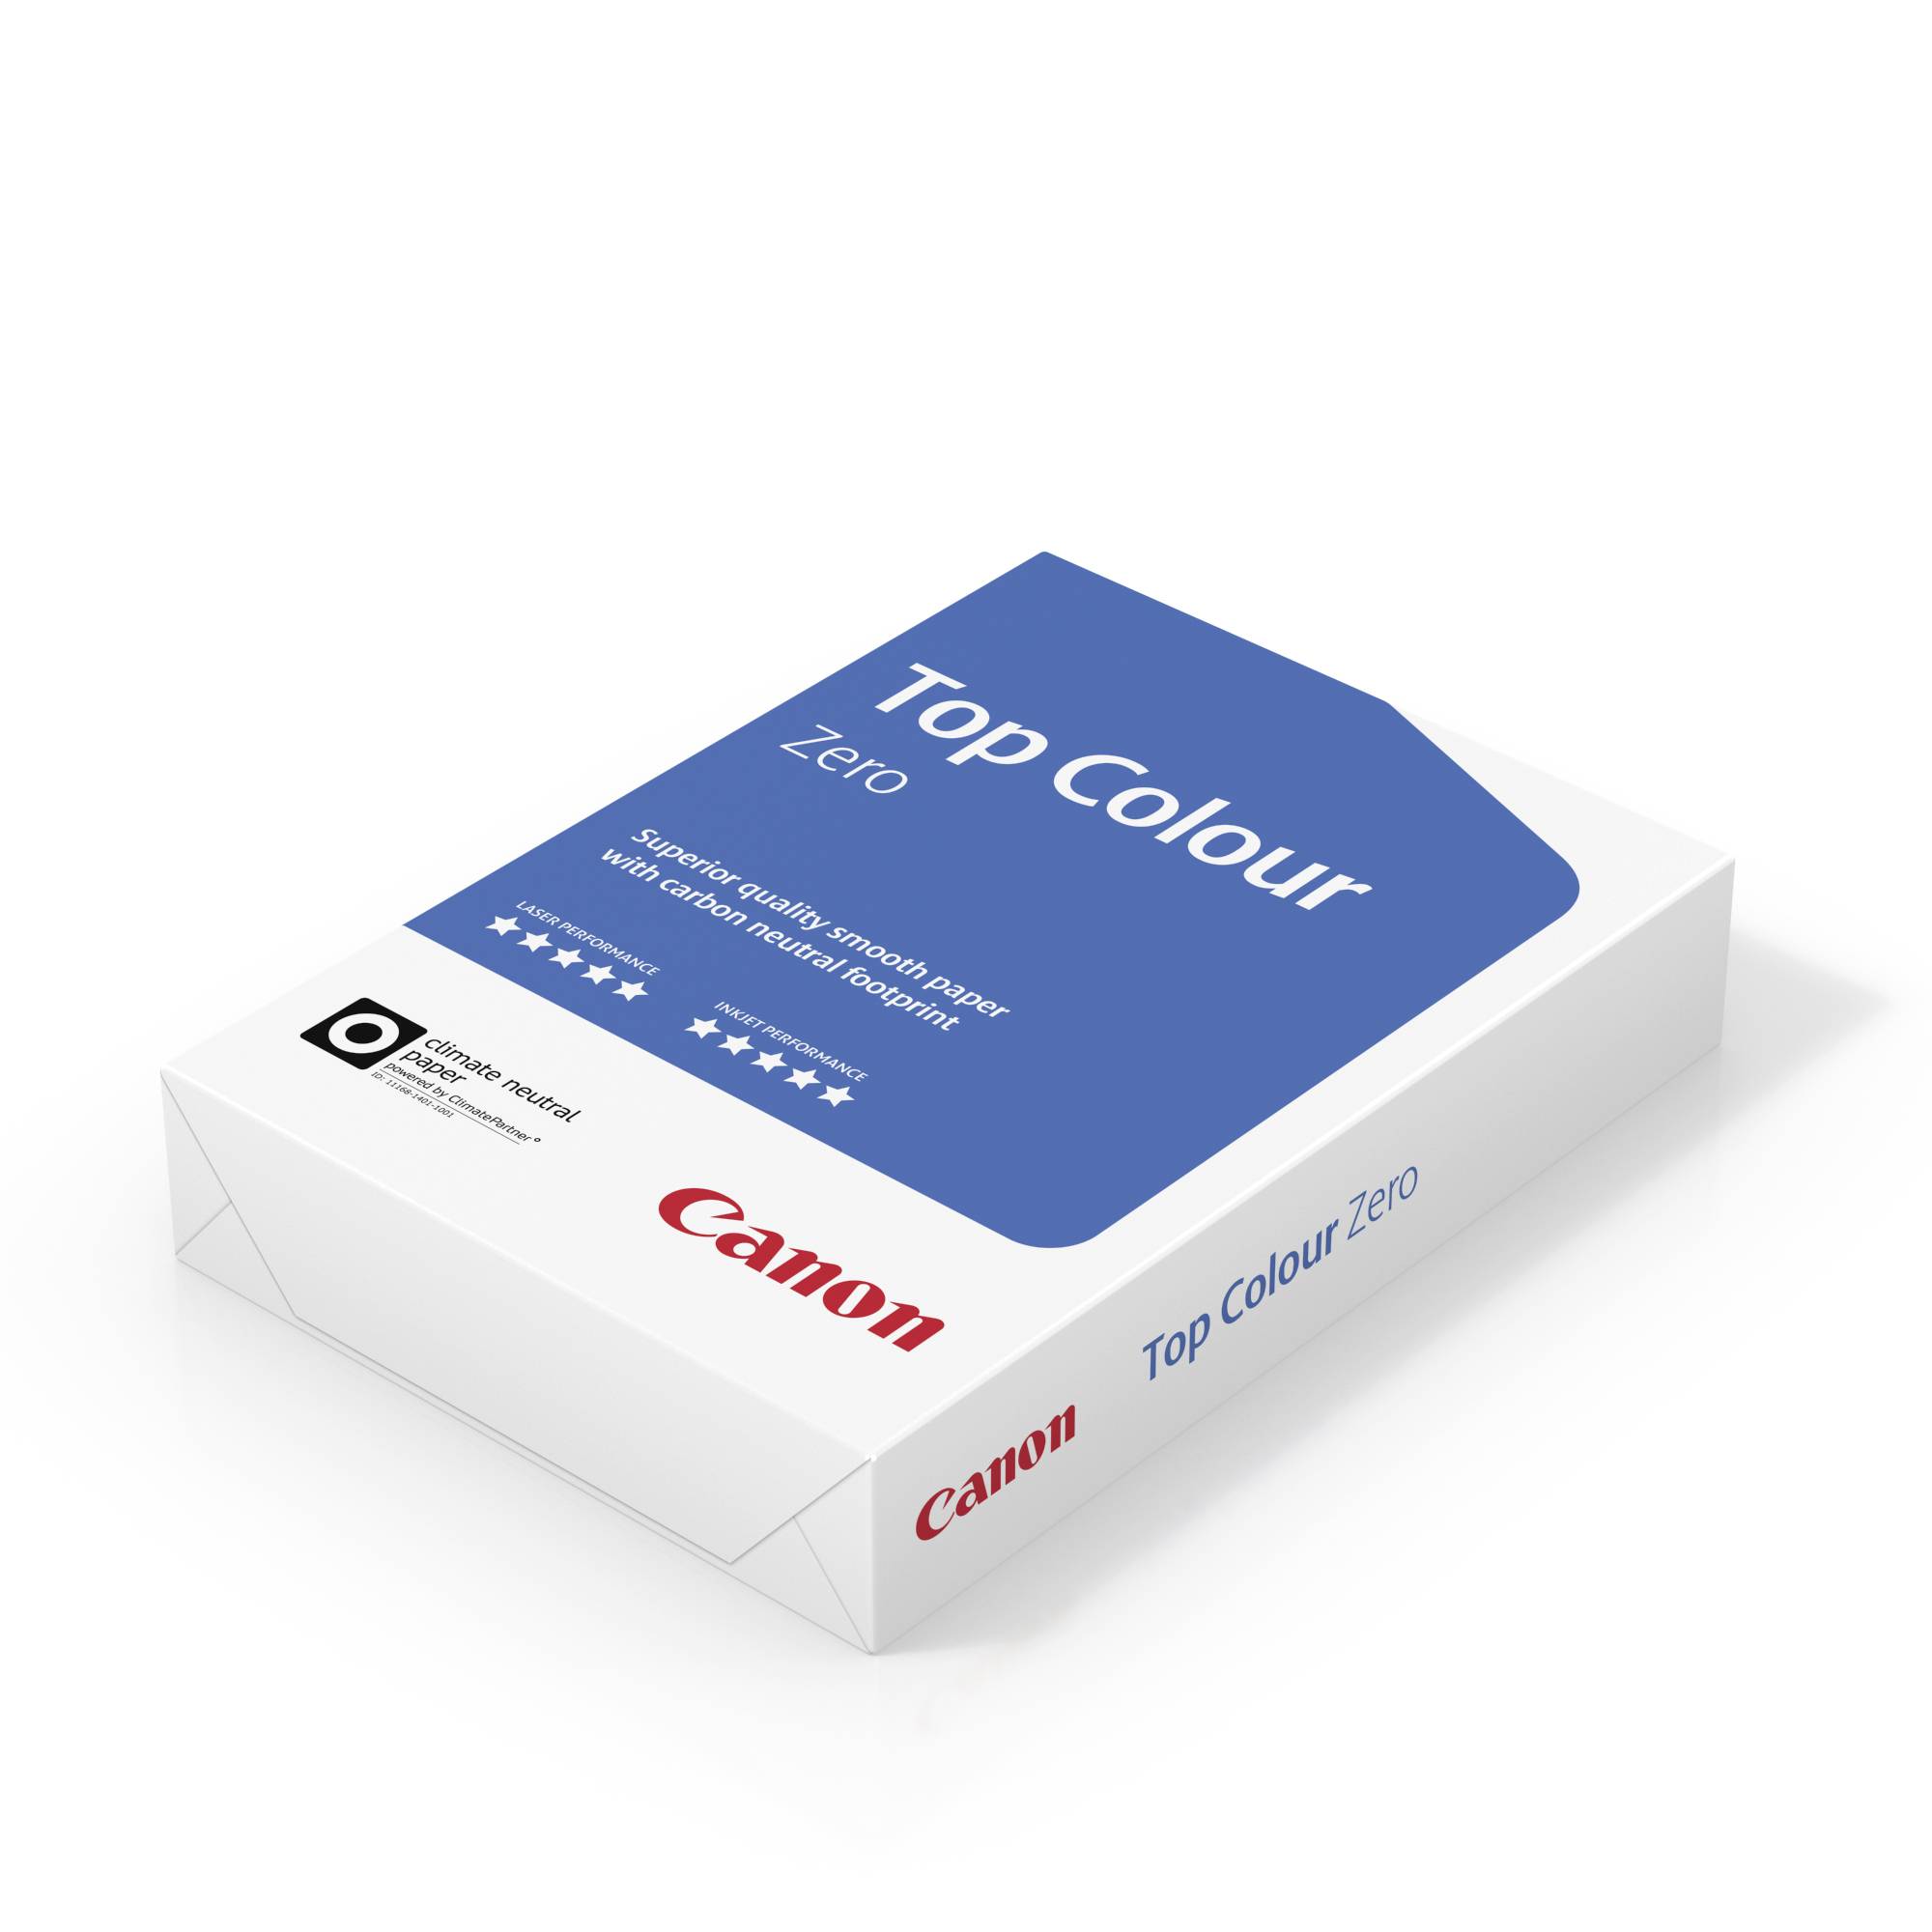 CANON Océ Top Color SAT033 - papir - glat sk